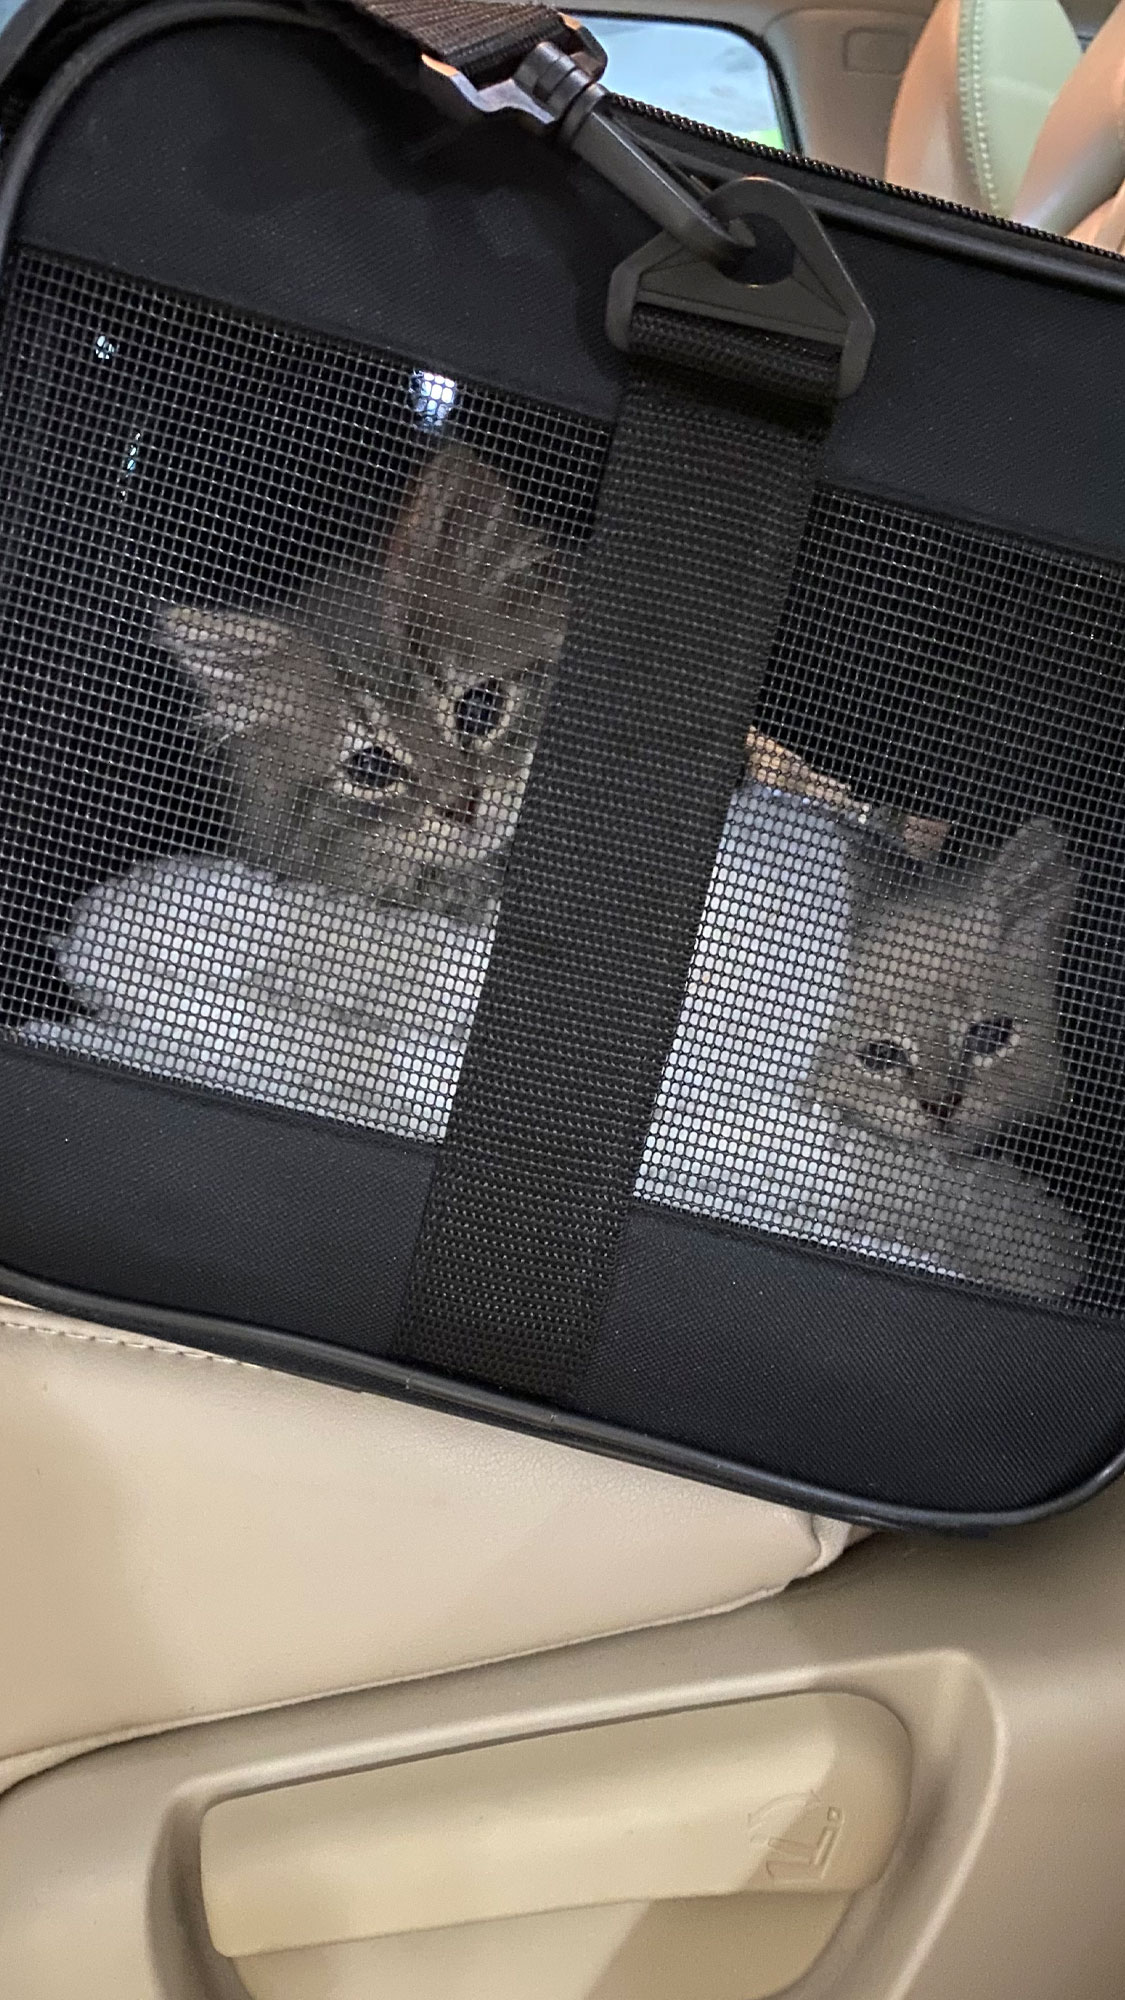 Flight Pet Nanny transporting Siberian Forest Kittens